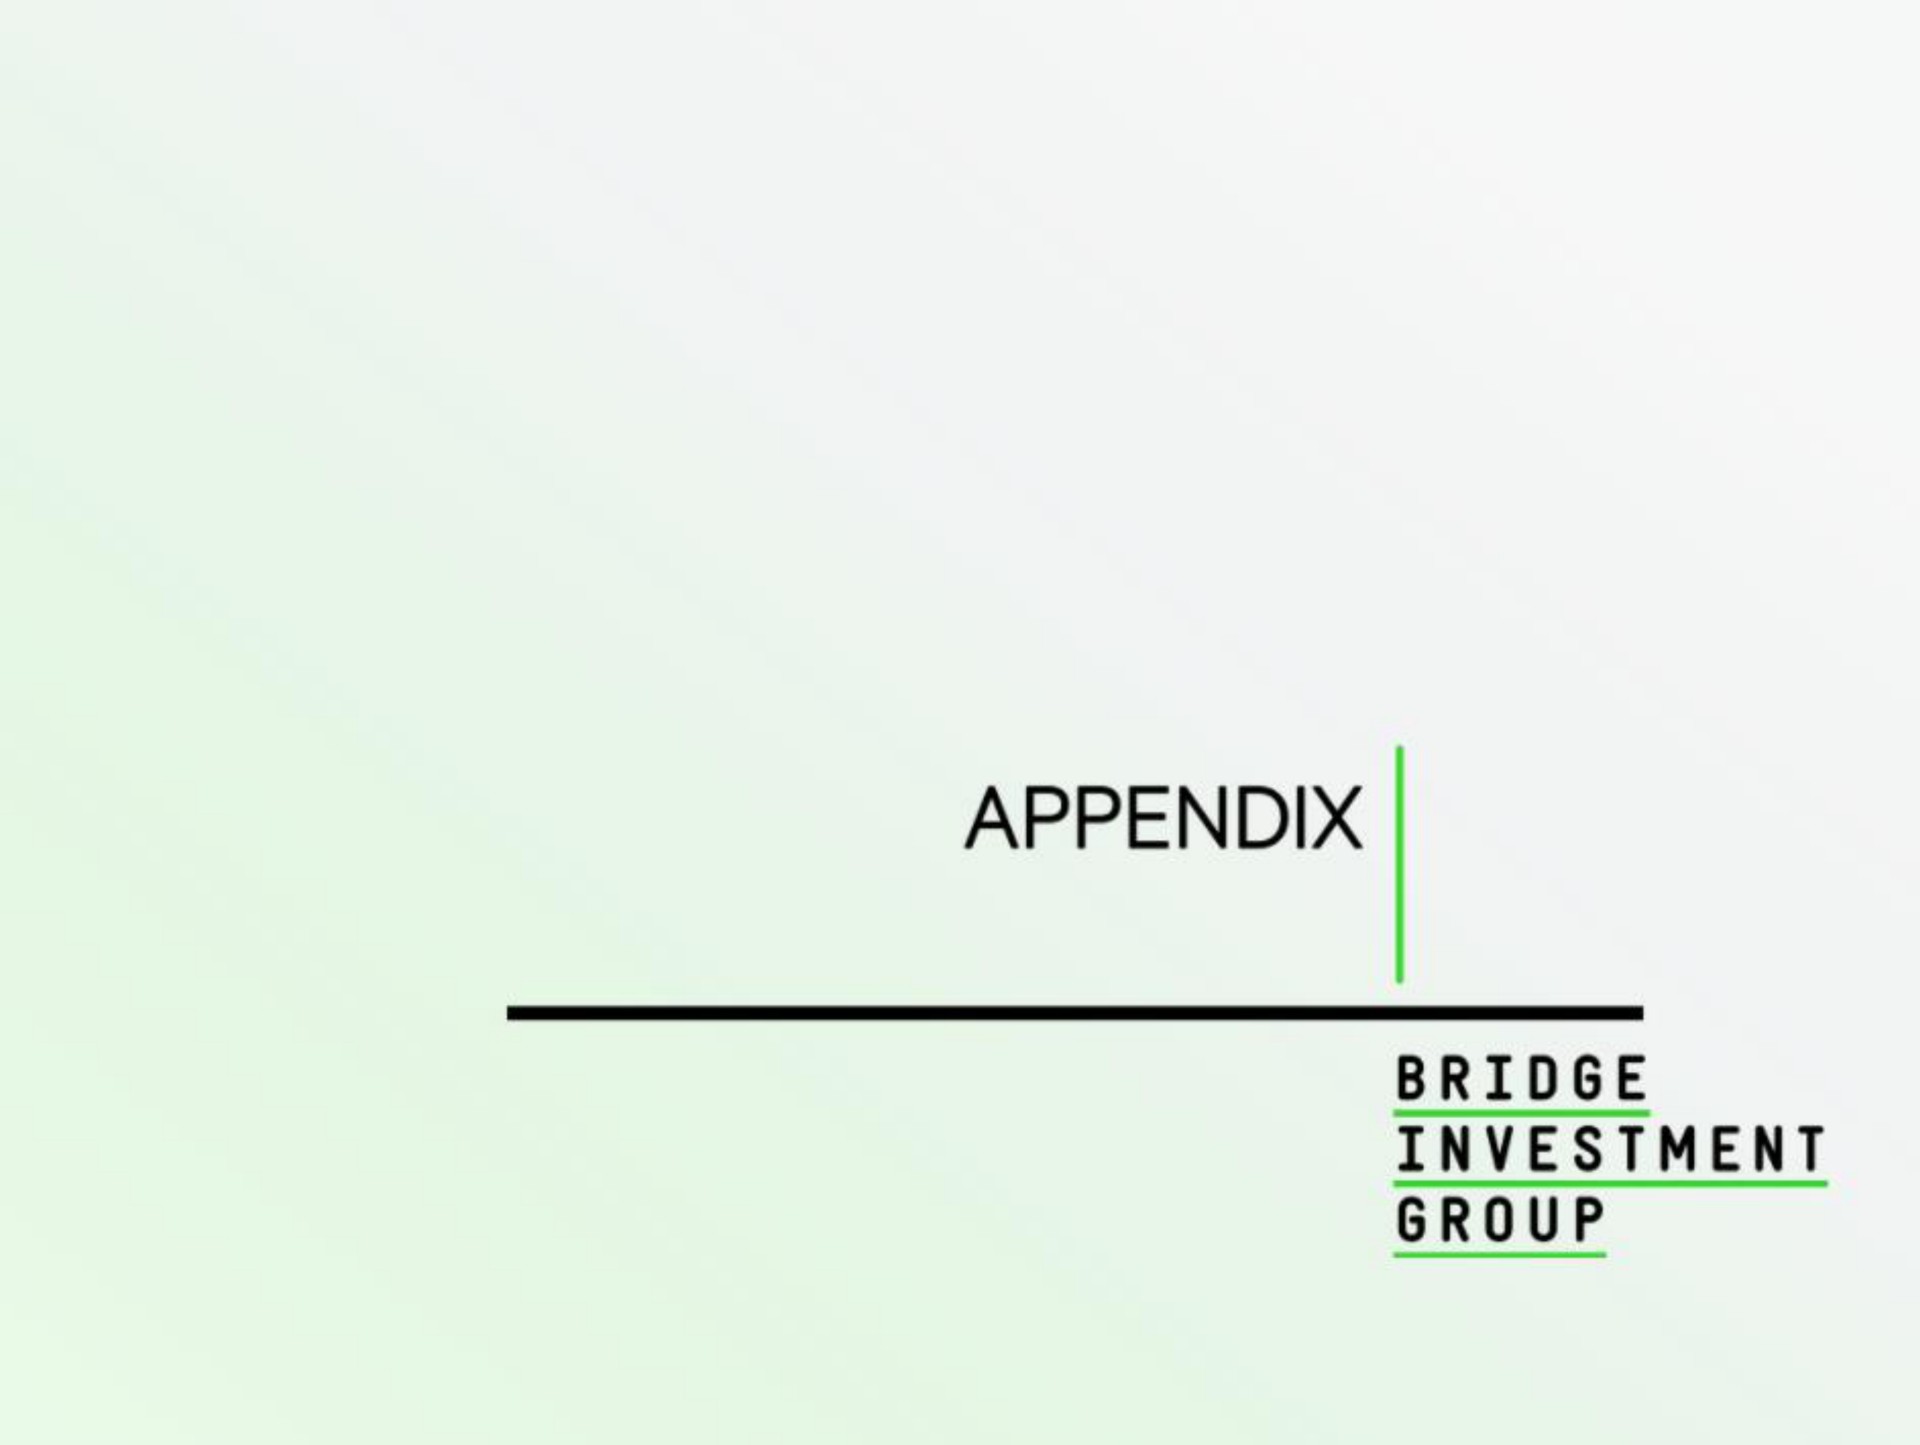 appendix bridge investment group | Bridge Investment Group